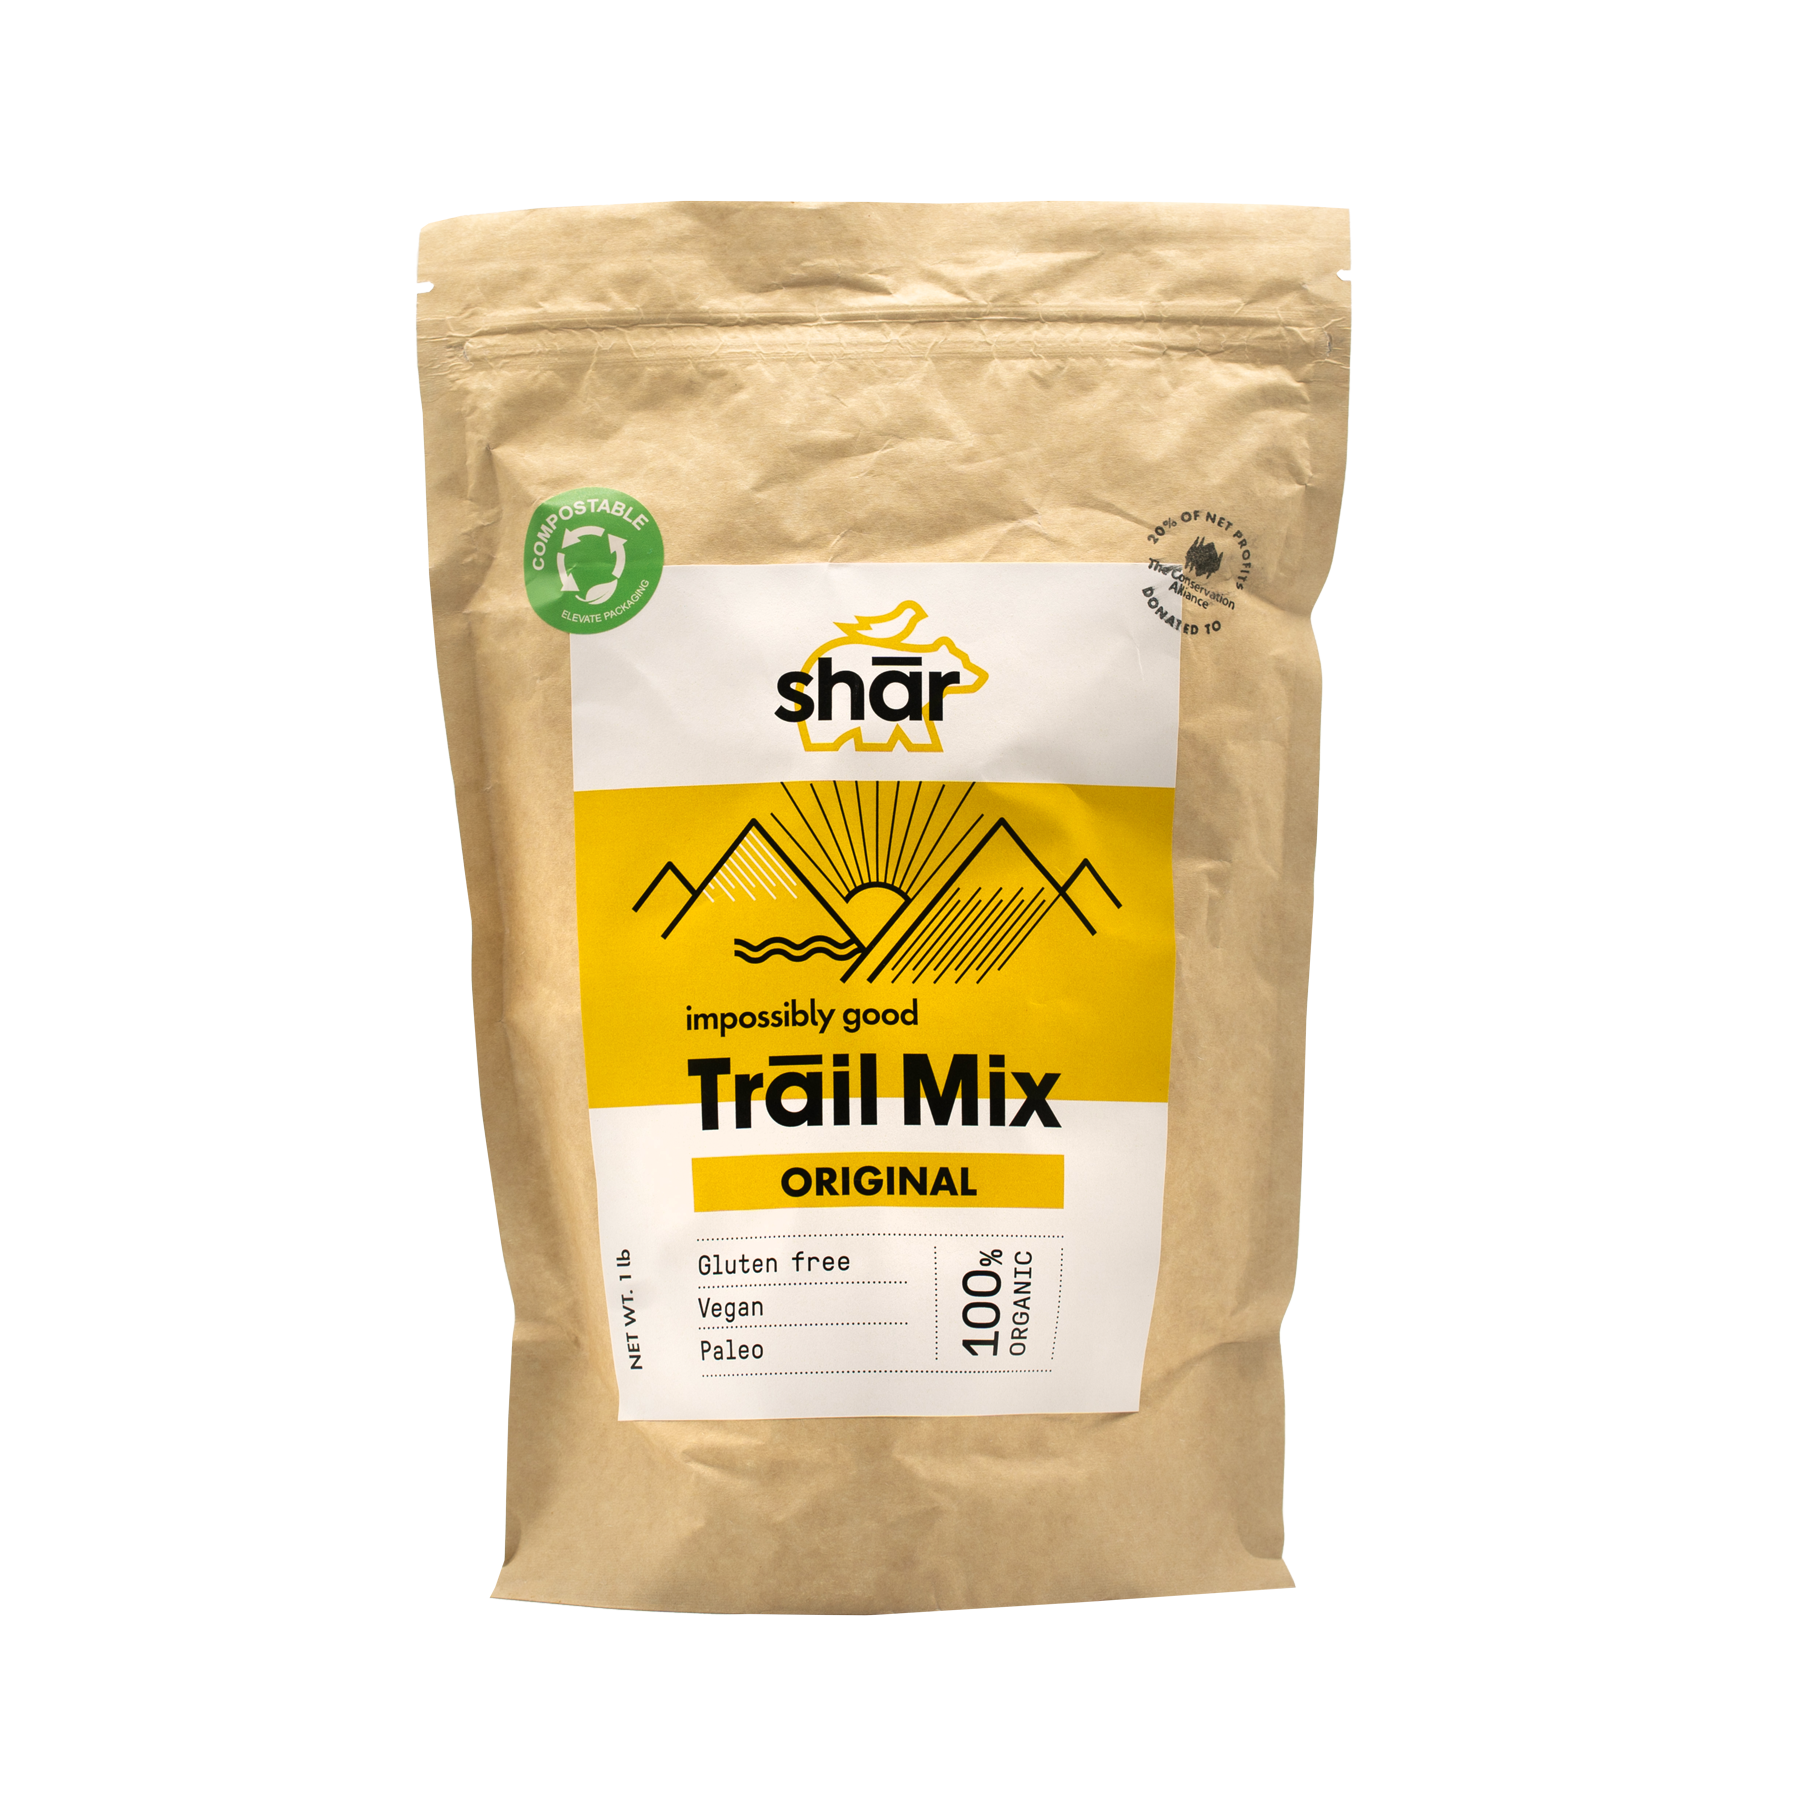 1.0 lb farm-to-table shār bag - Original